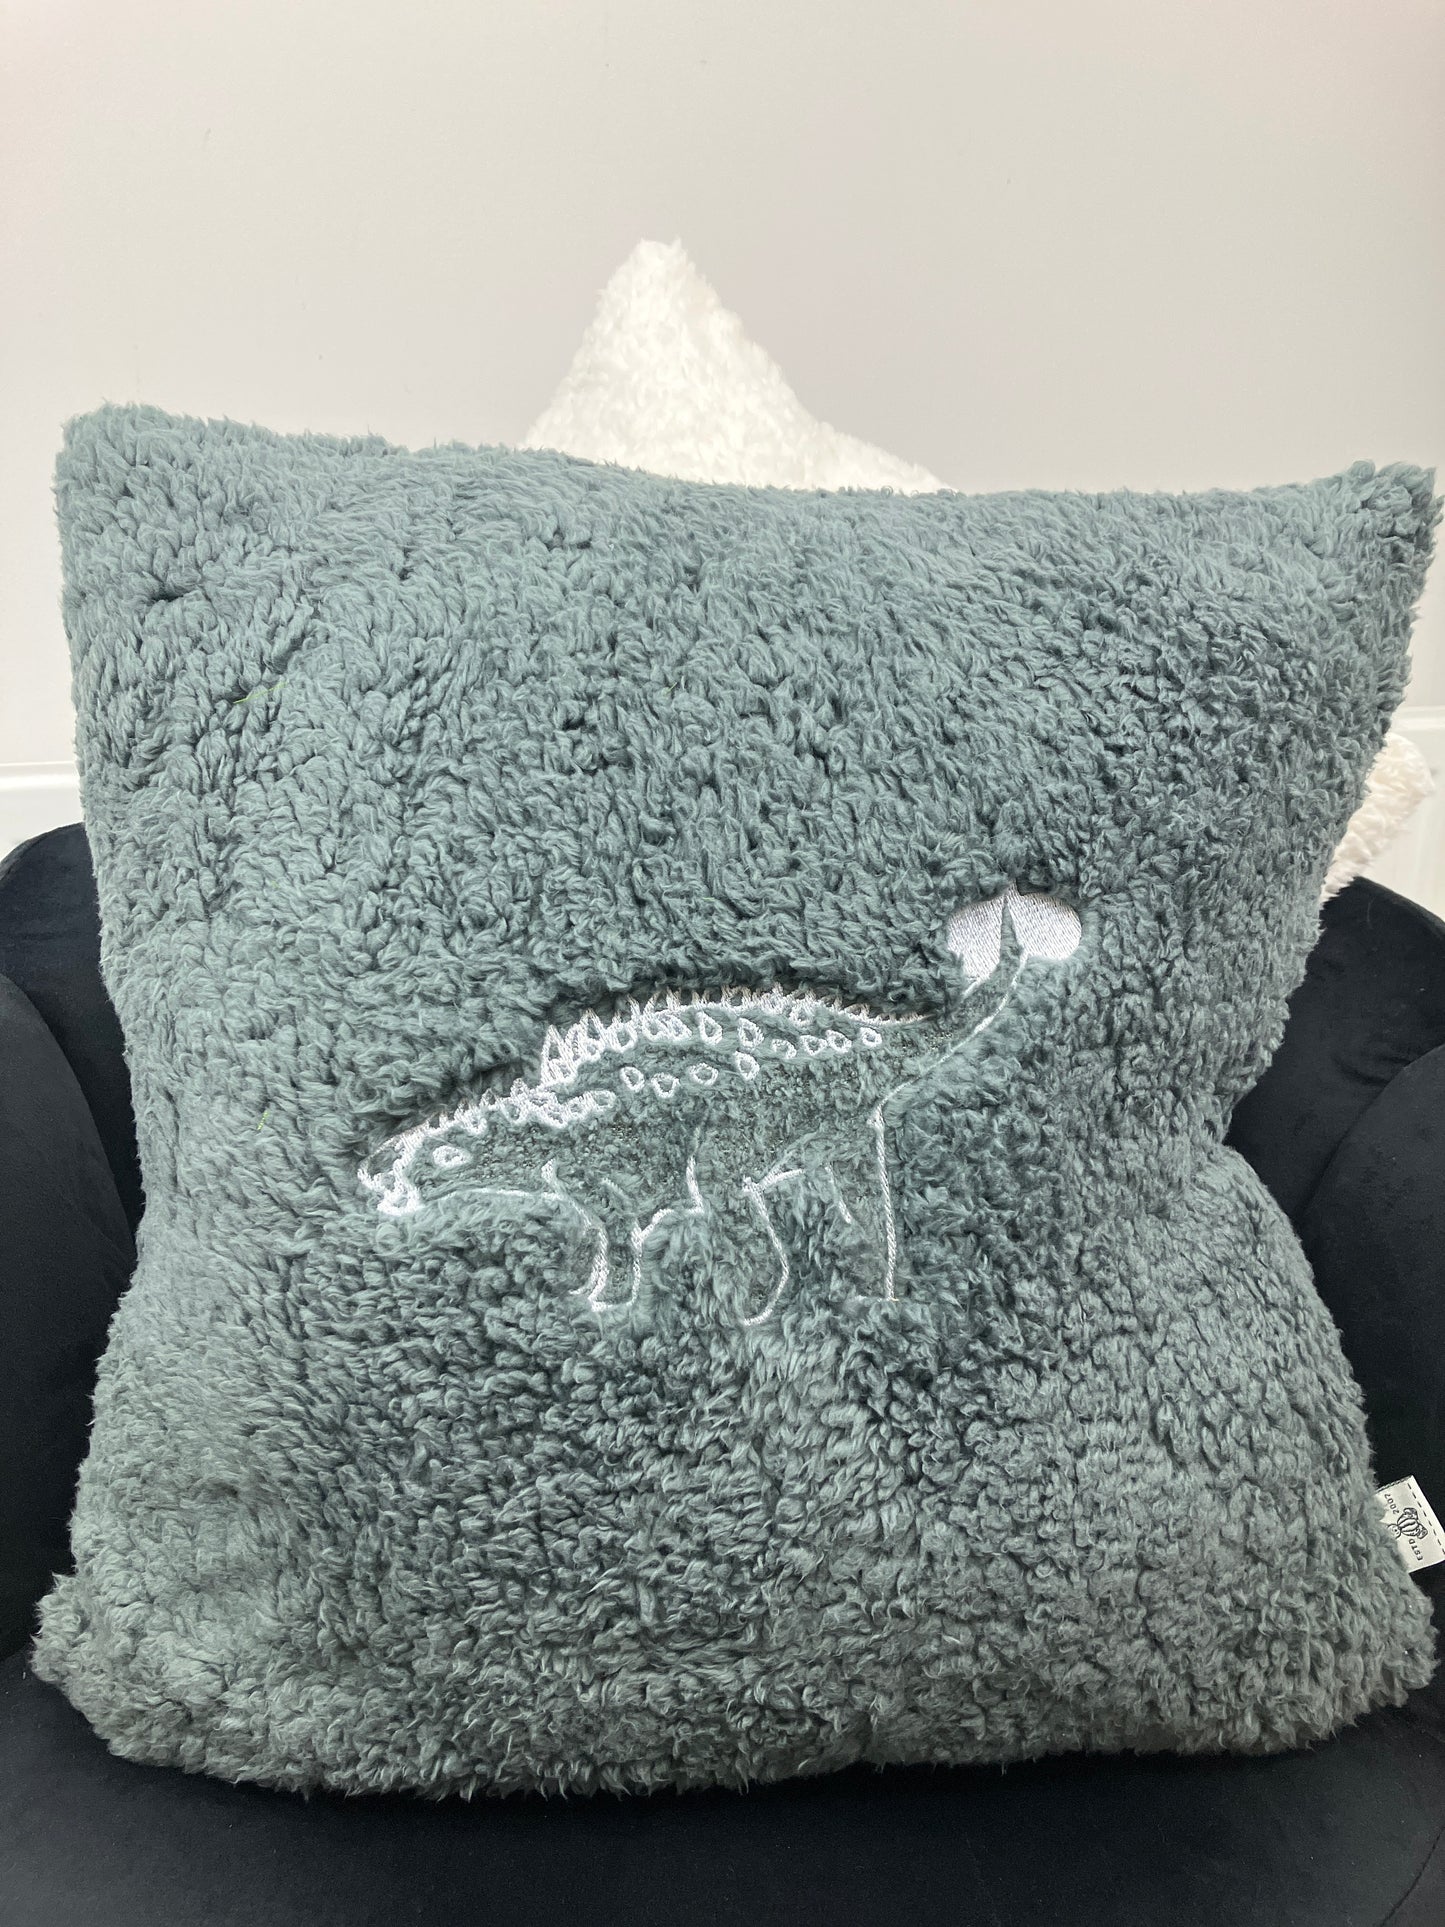 Embroidered Dinosaur Cushion